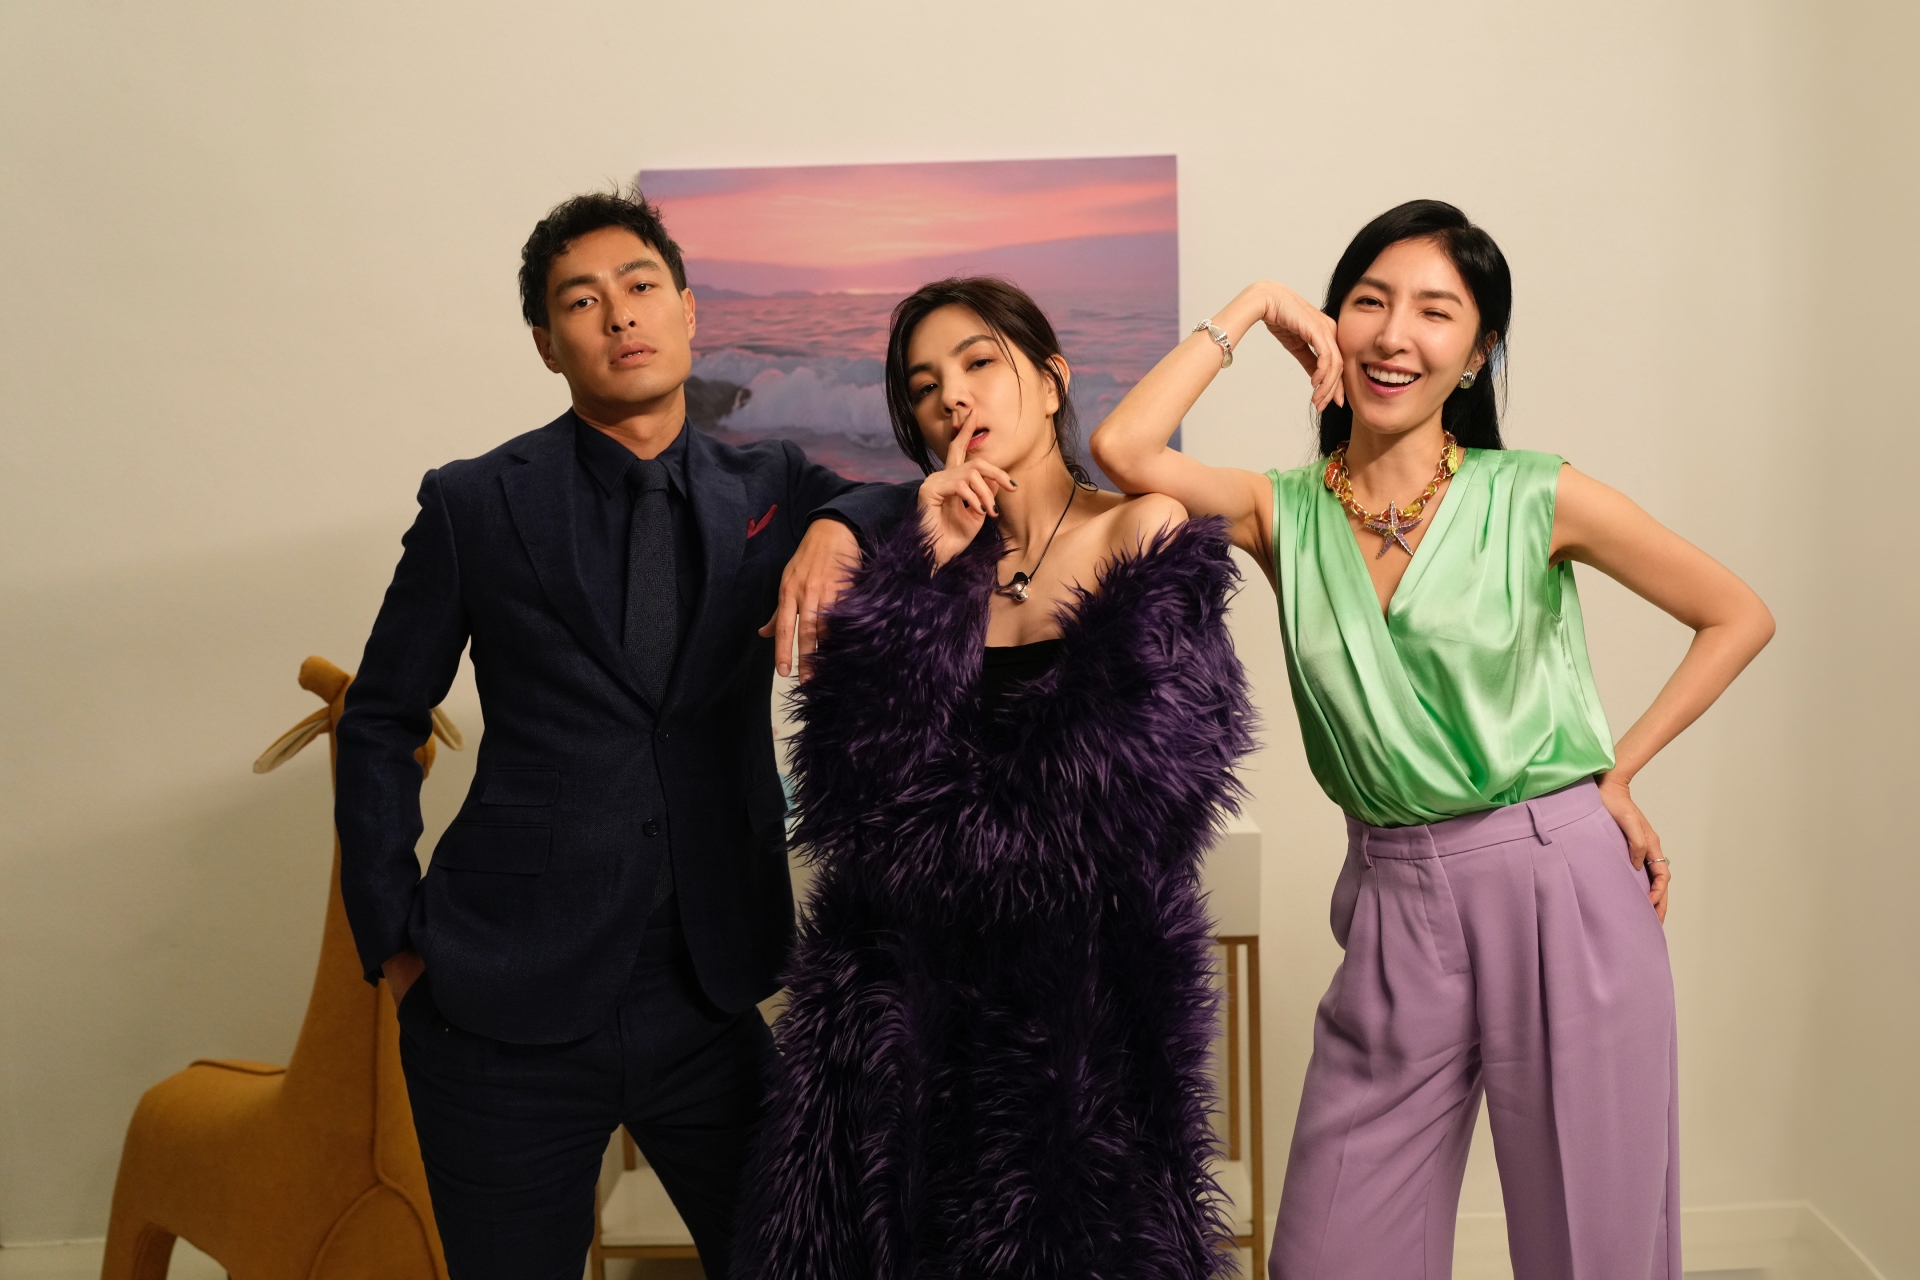 Ella與楊謹華、楊祐寧三位好友為拍攝MV相聚充滿笑聲。圖/勁樺娛樂提供